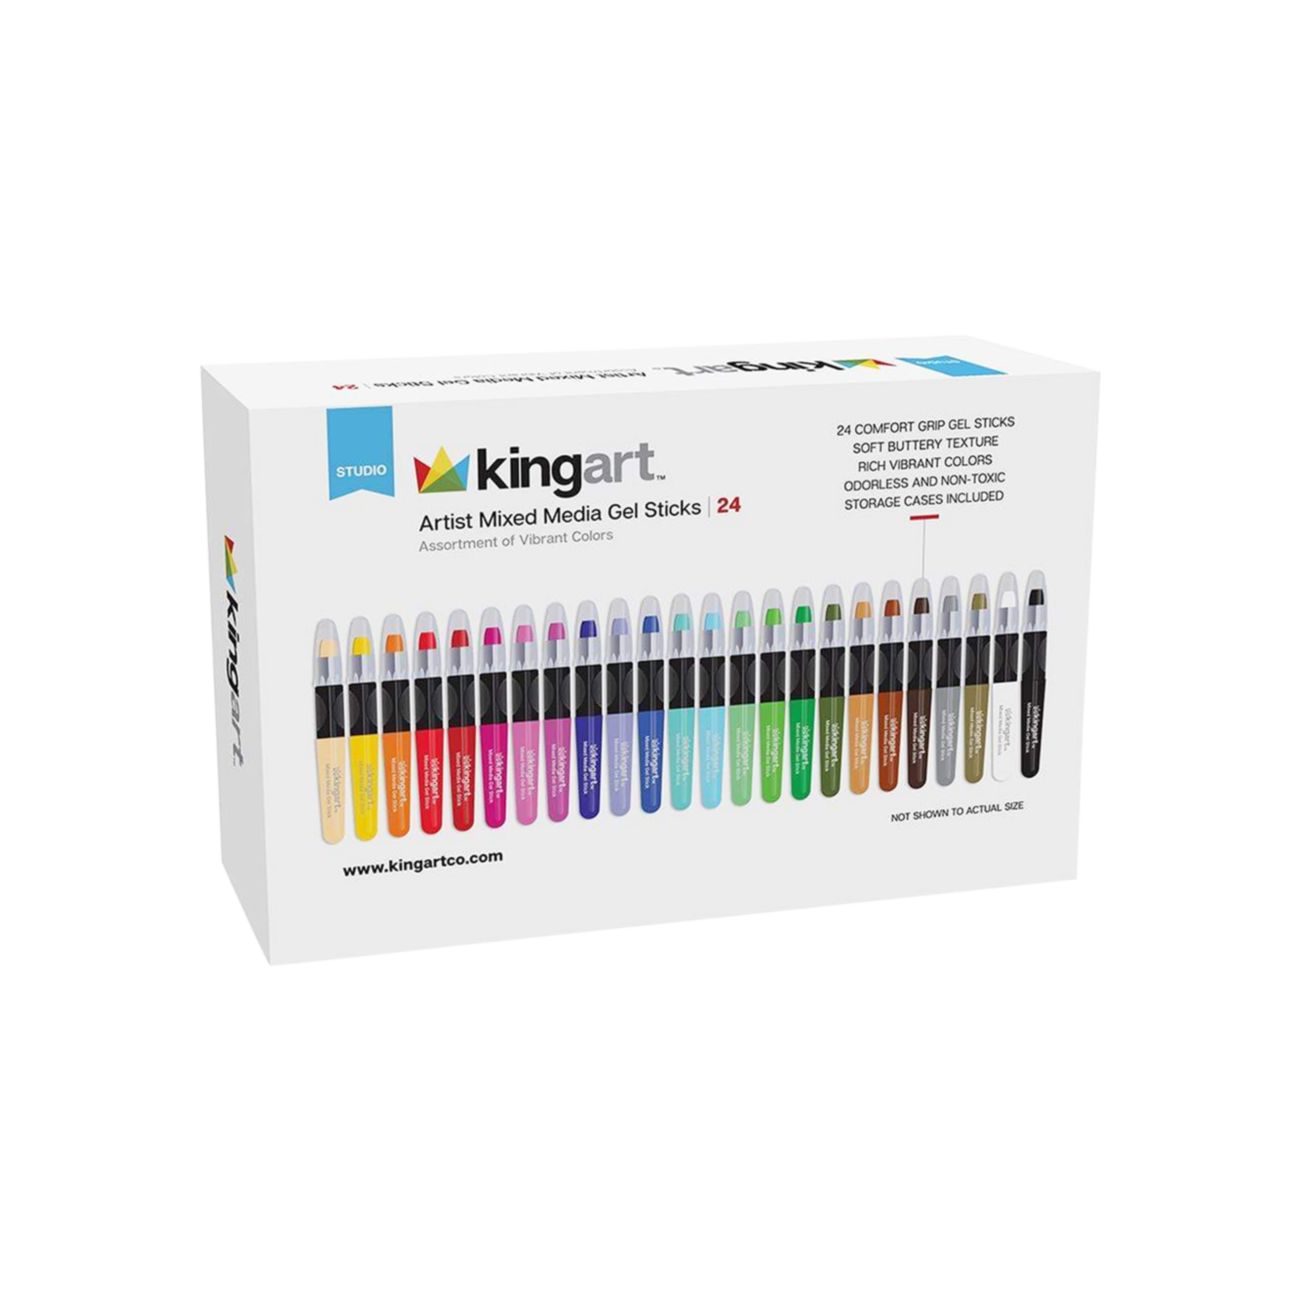 Kingart Gel Stick artist Mixed купить. Kingart tempera Paint Stick. Unique colors